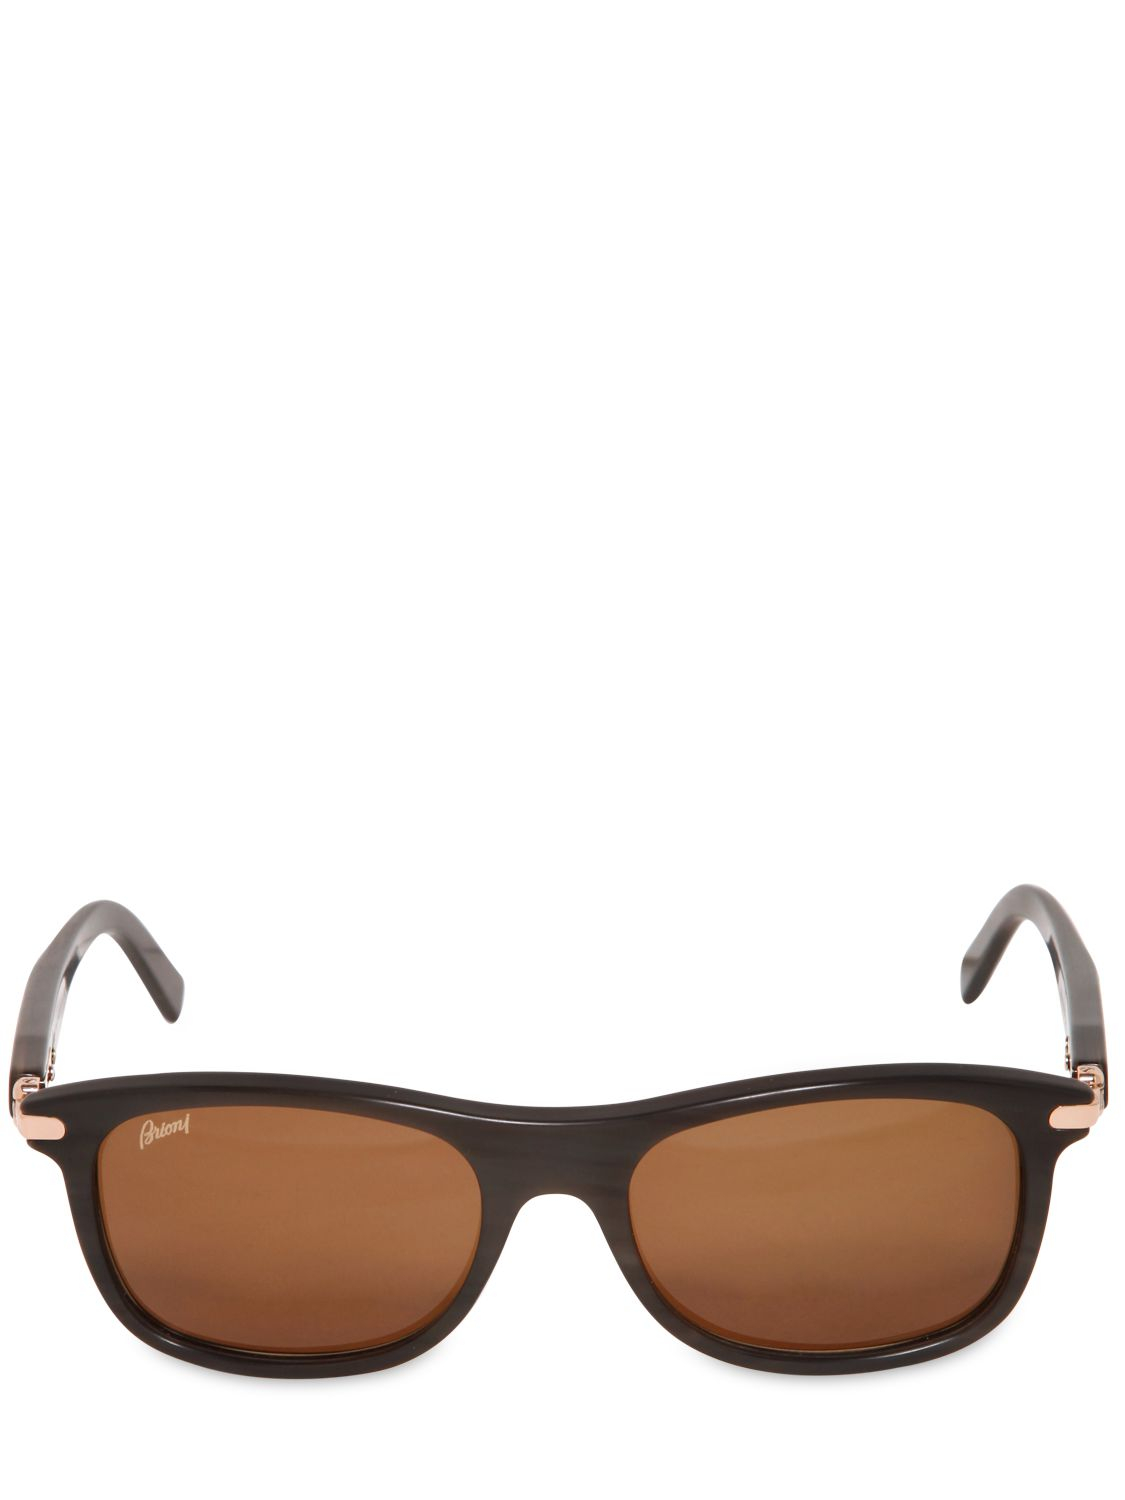 Brioni Handmade Horn Sunglasses in Brown for Men - Lyst